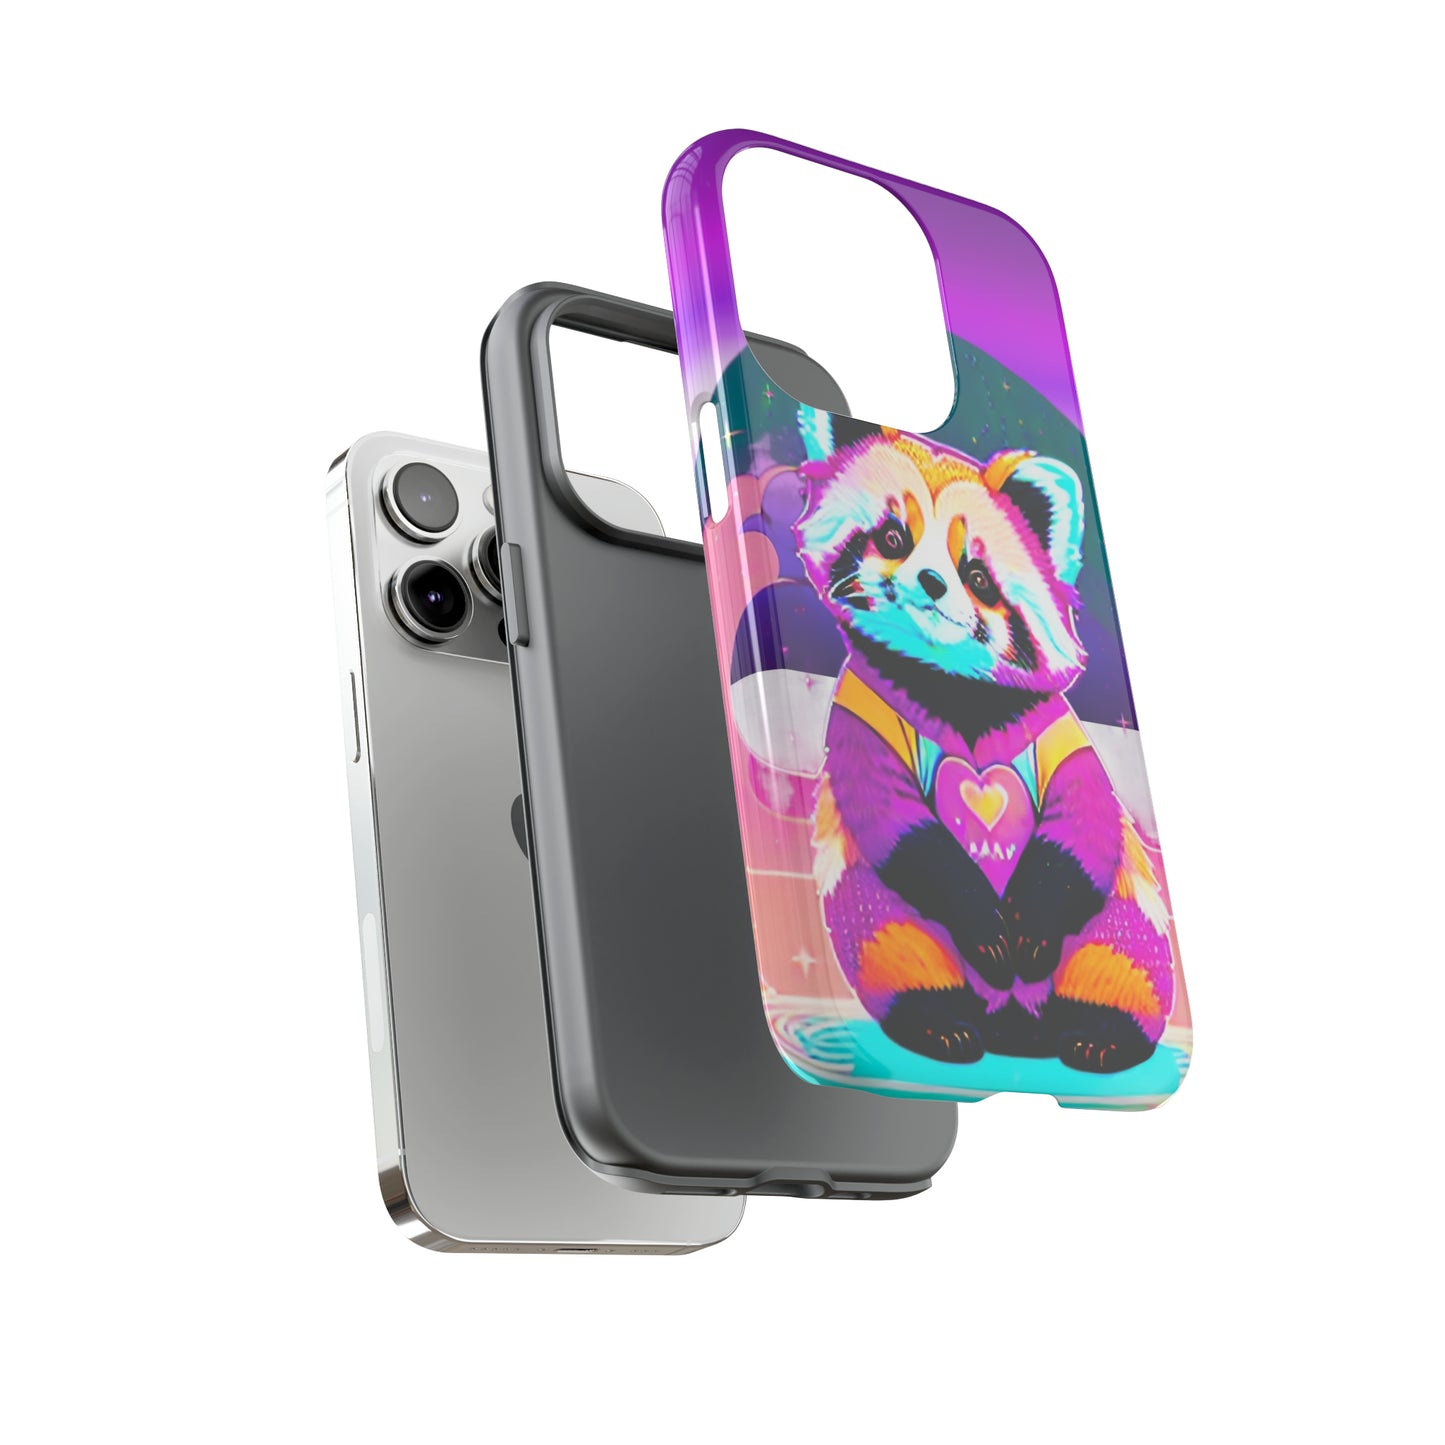 Colorful Red Panda Tough Phone Case